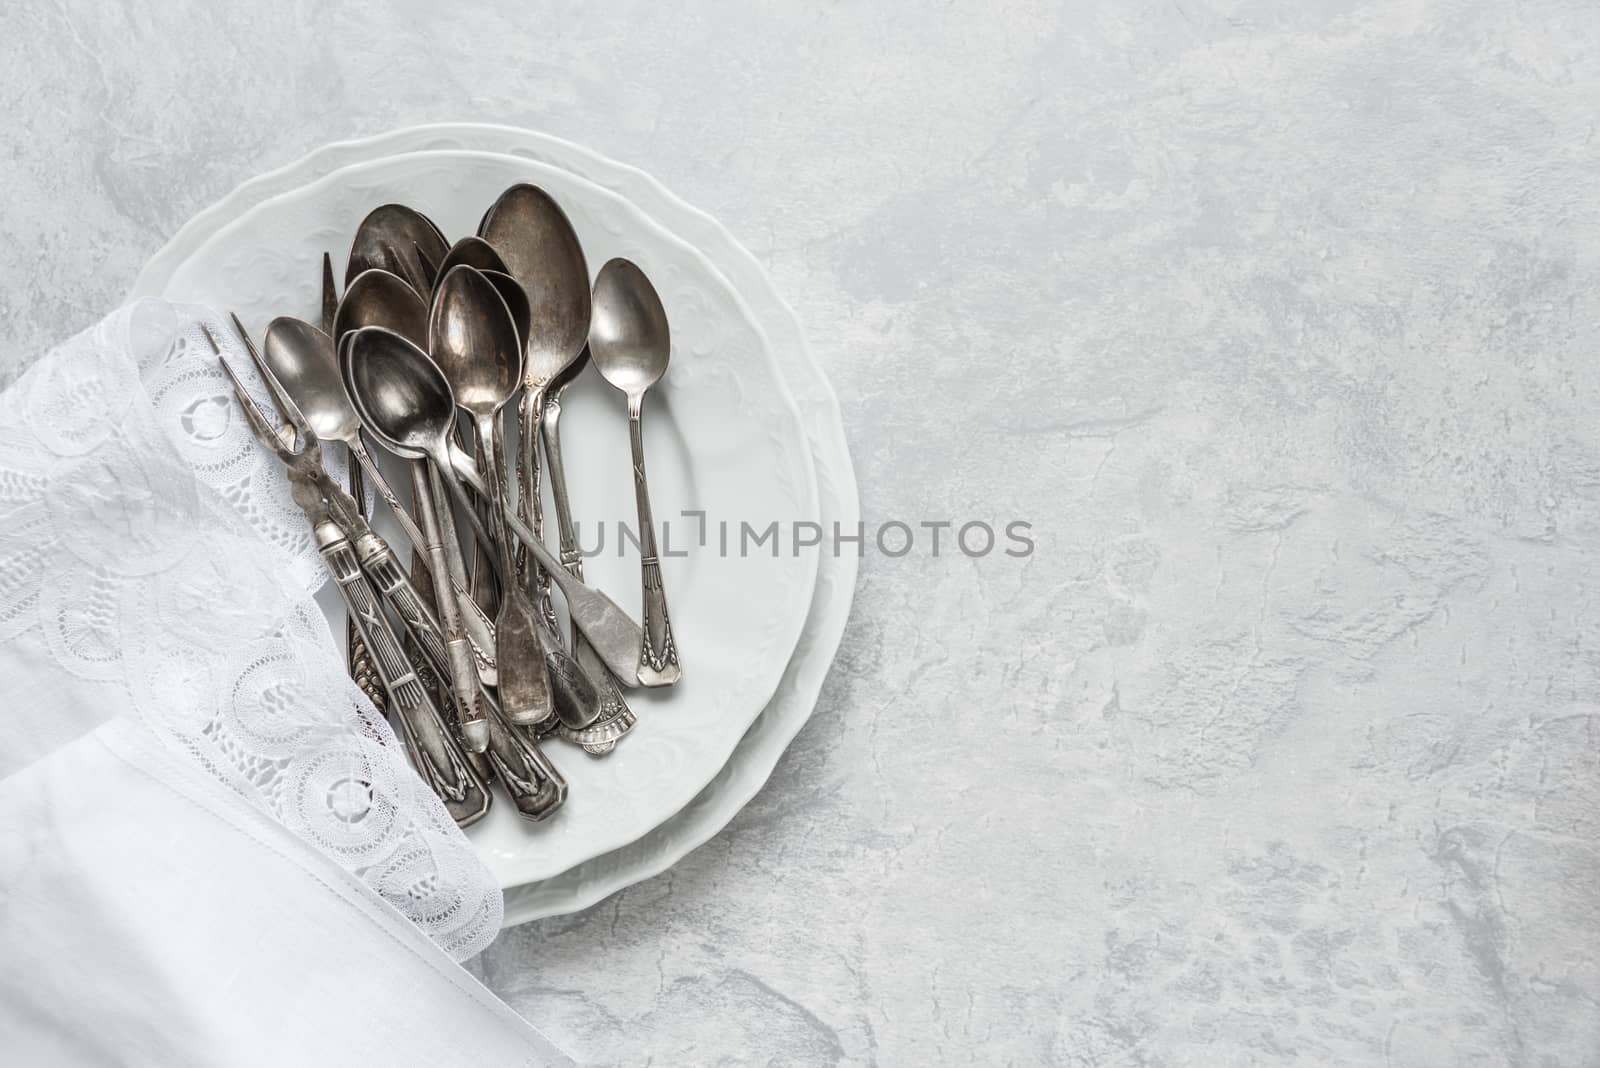 Silverware on a porcelain plates by Epitavi